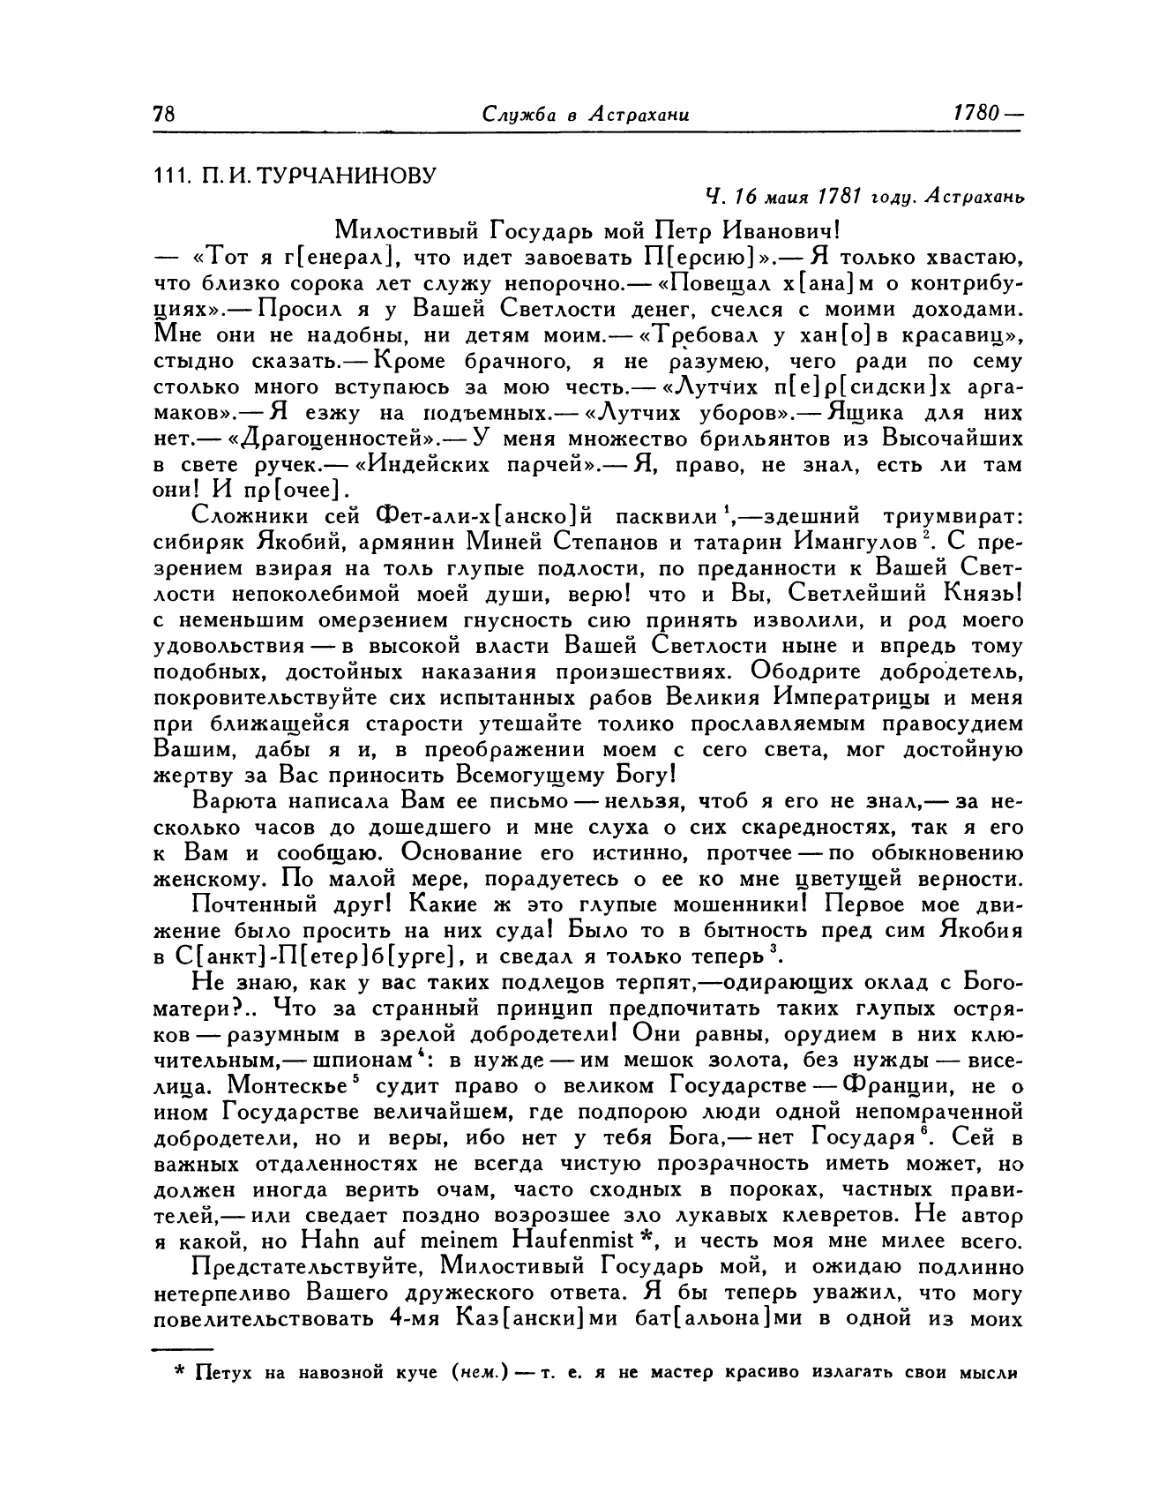 111. П.И.Турчанинову. 16.V.1781